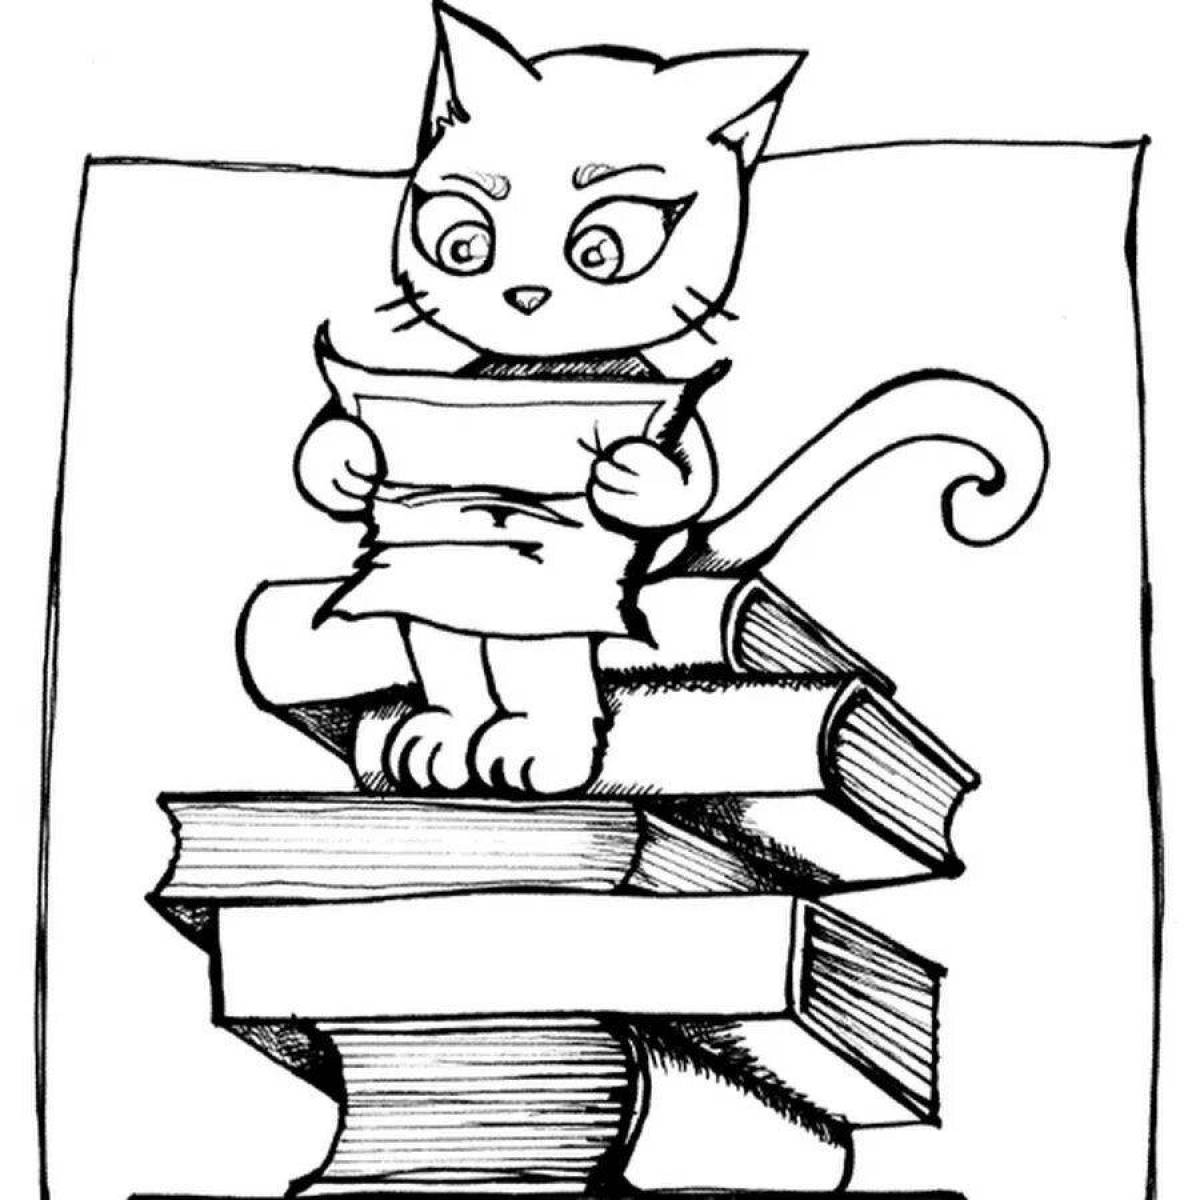 Coloring page adorable scientist cat